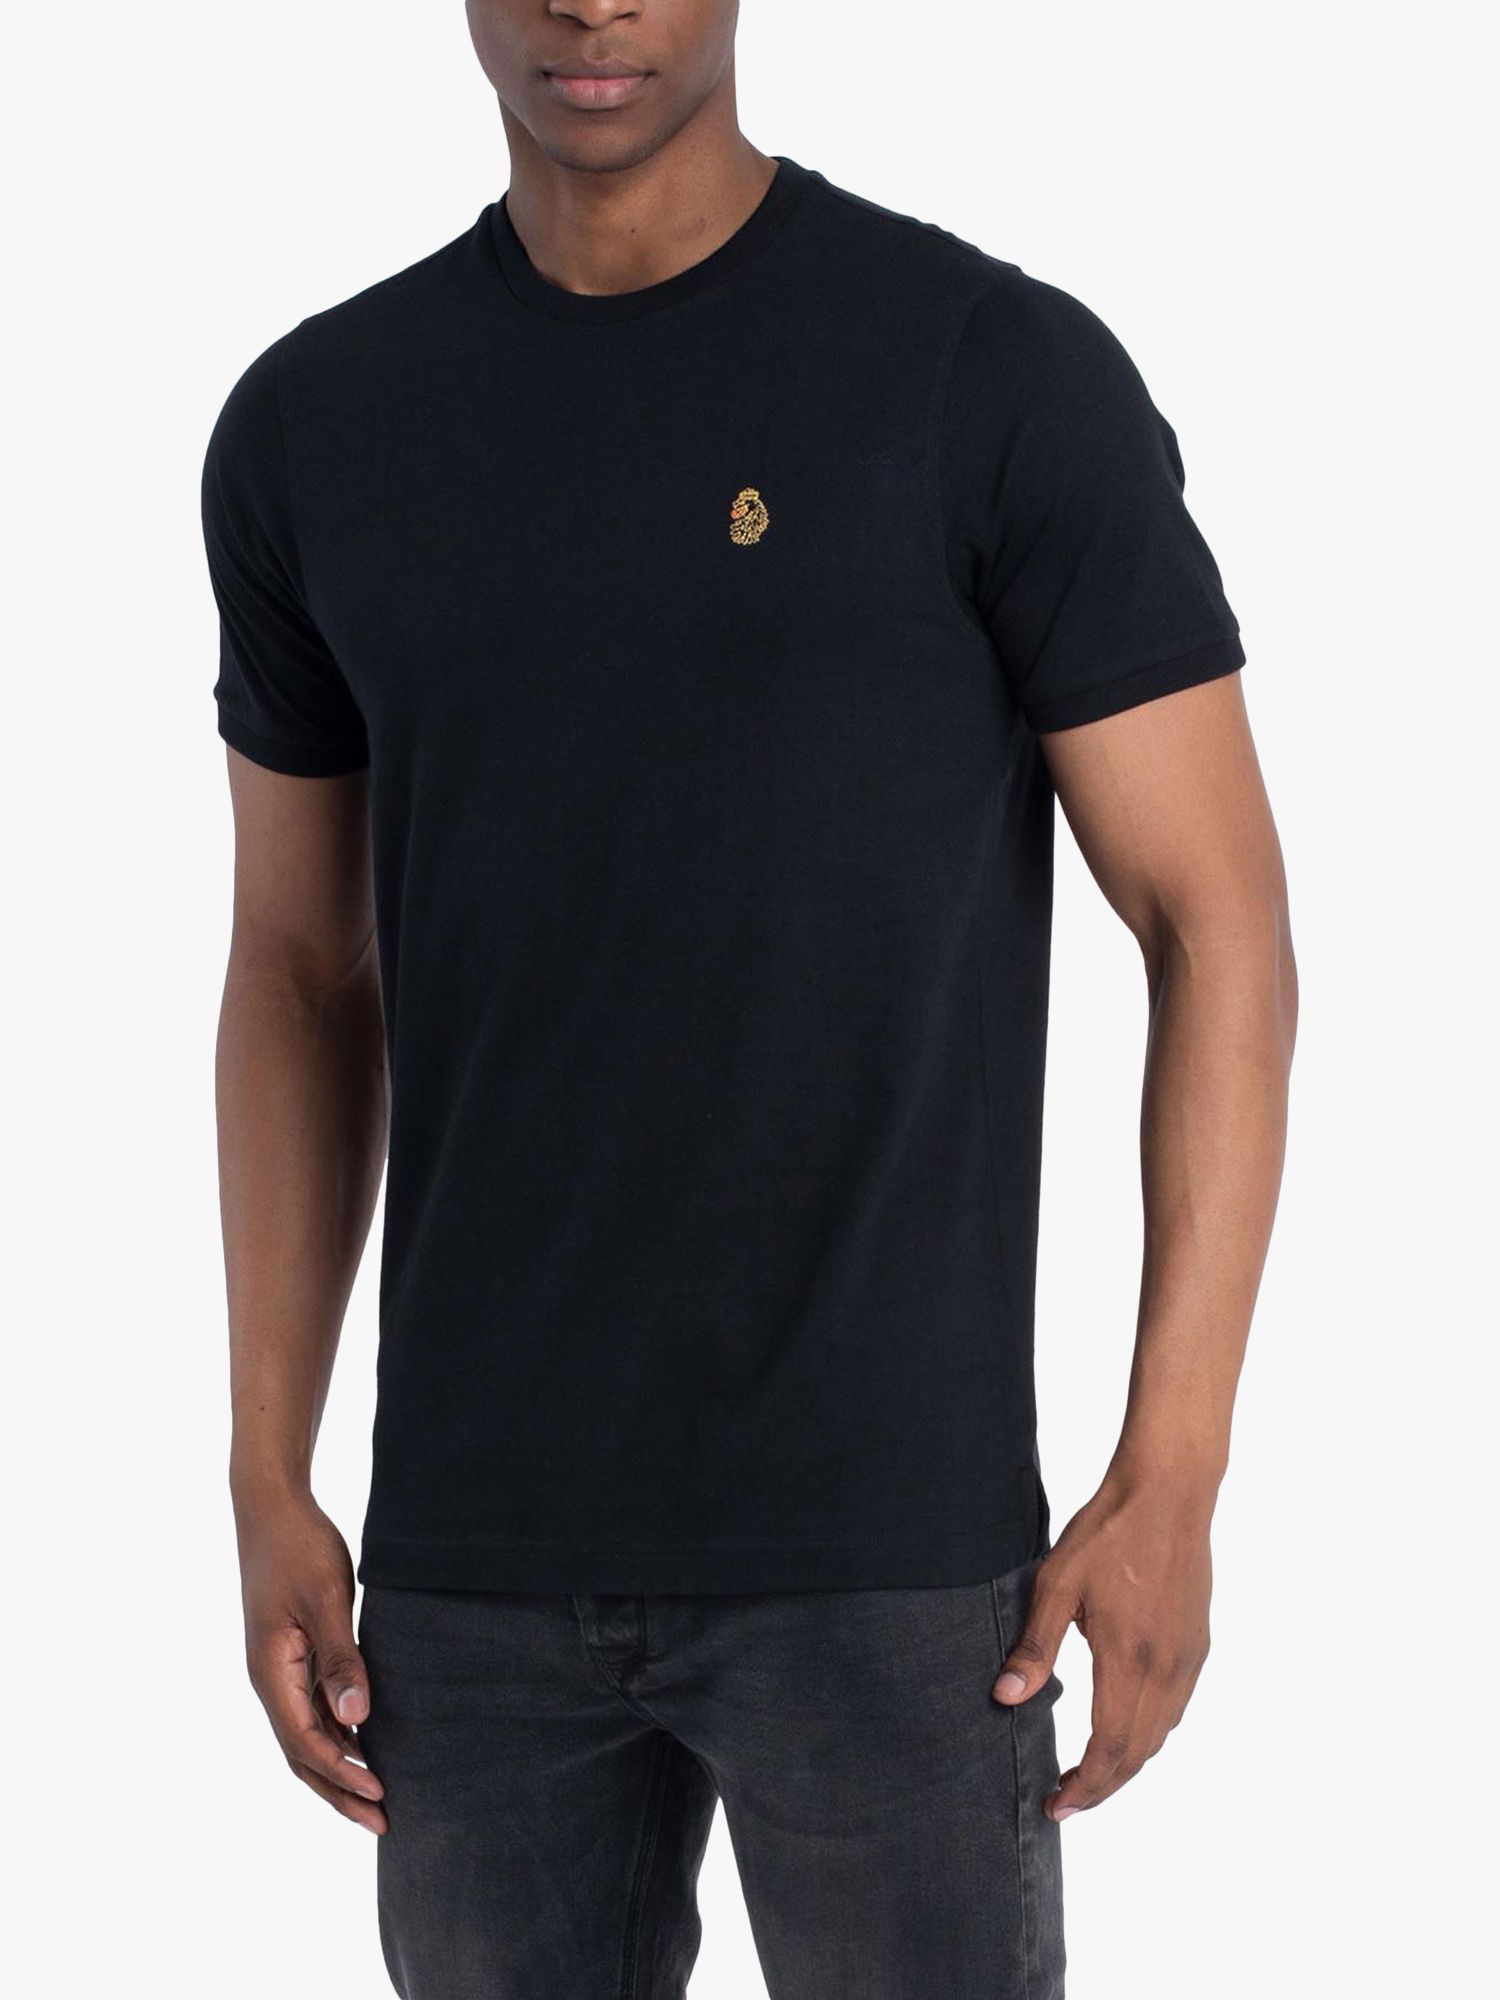 LUKE 1977 Traffs T-Shirt, Black, XS